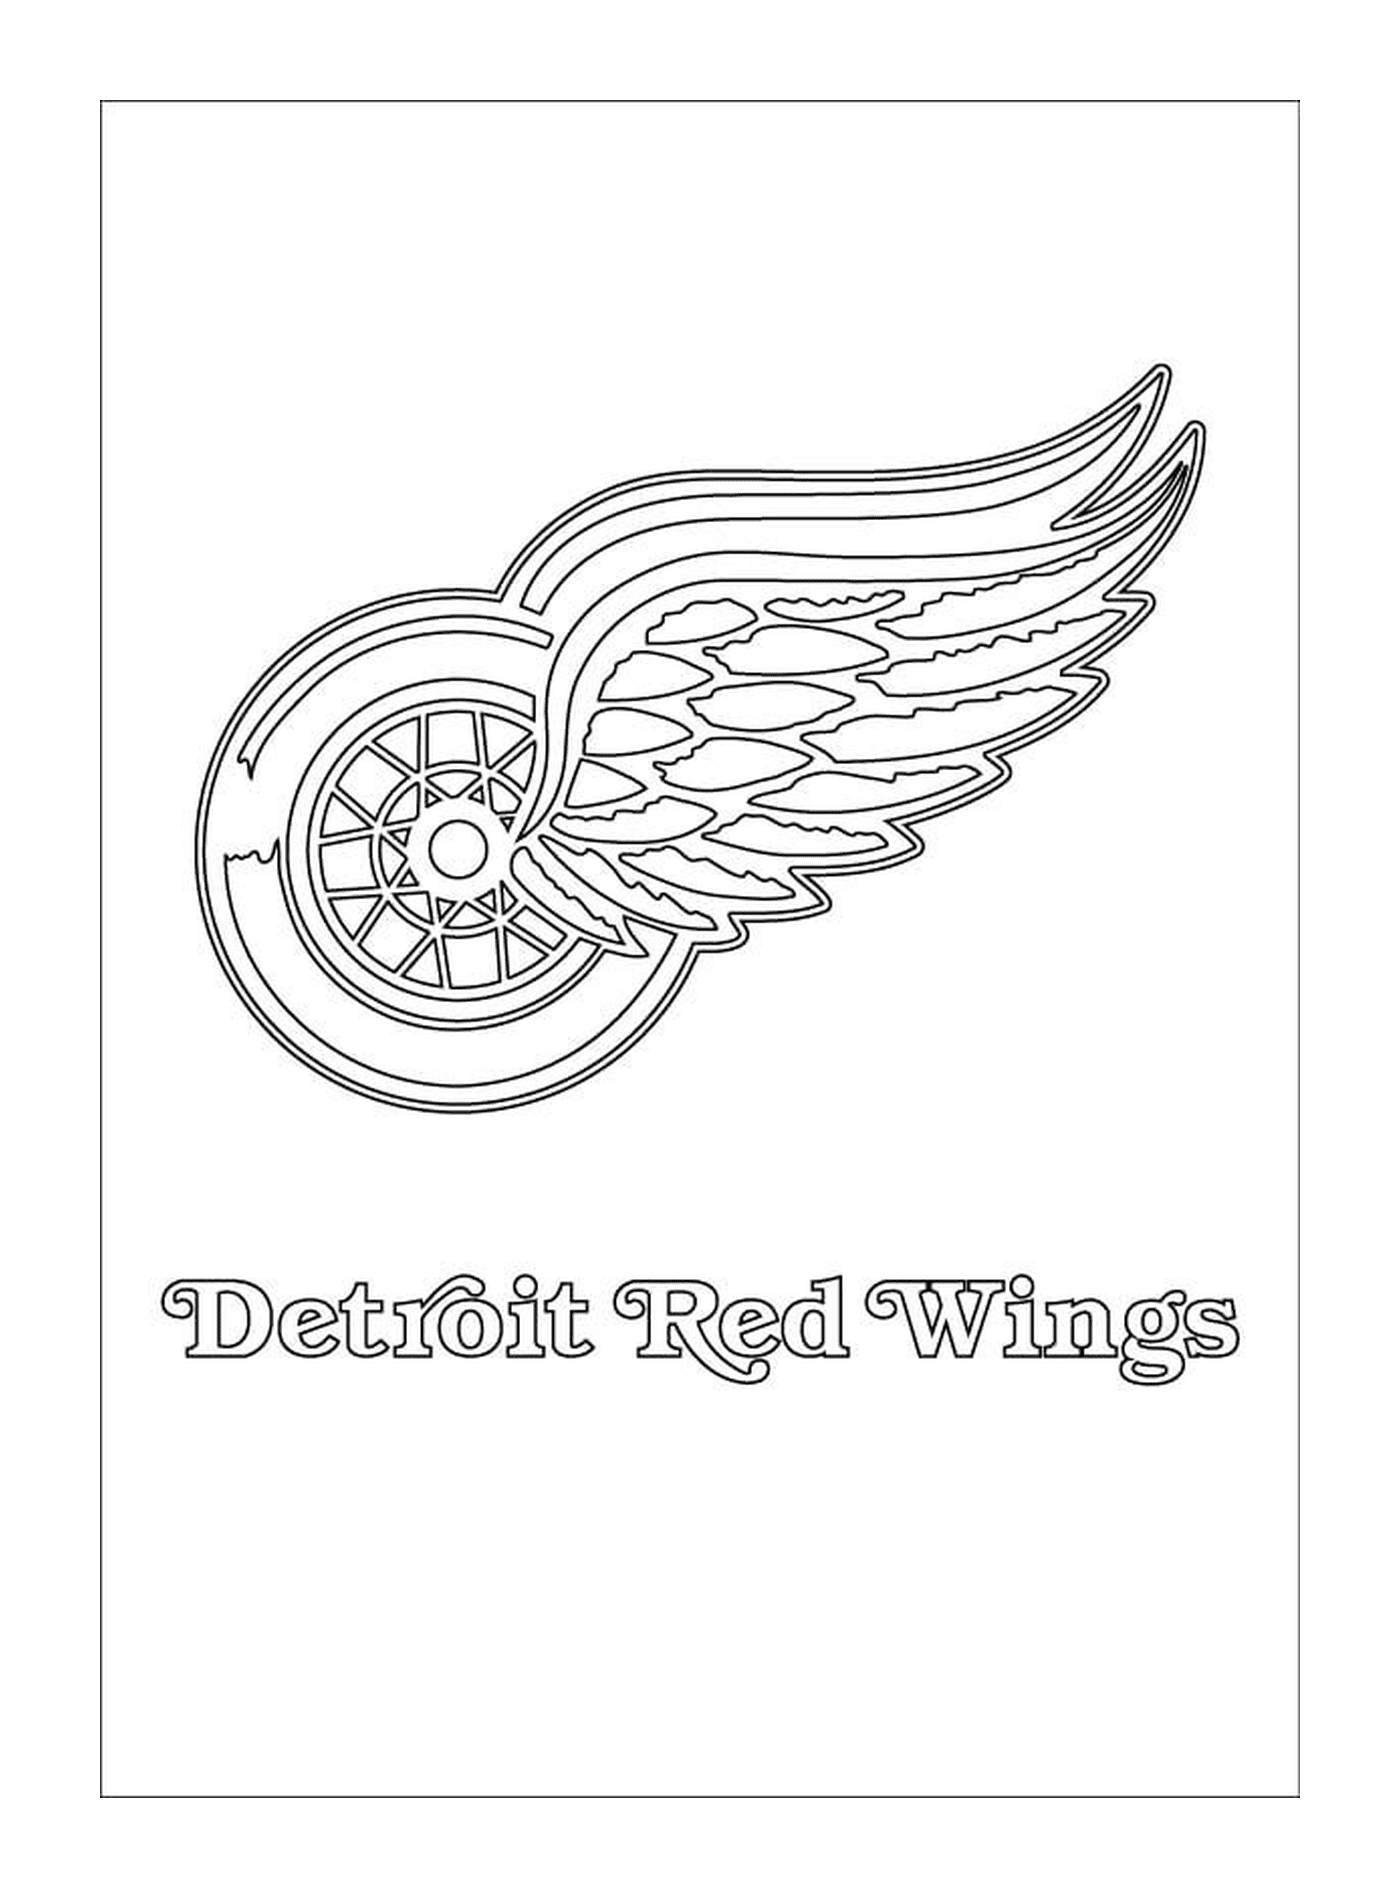  Detroit Red Wings logo 